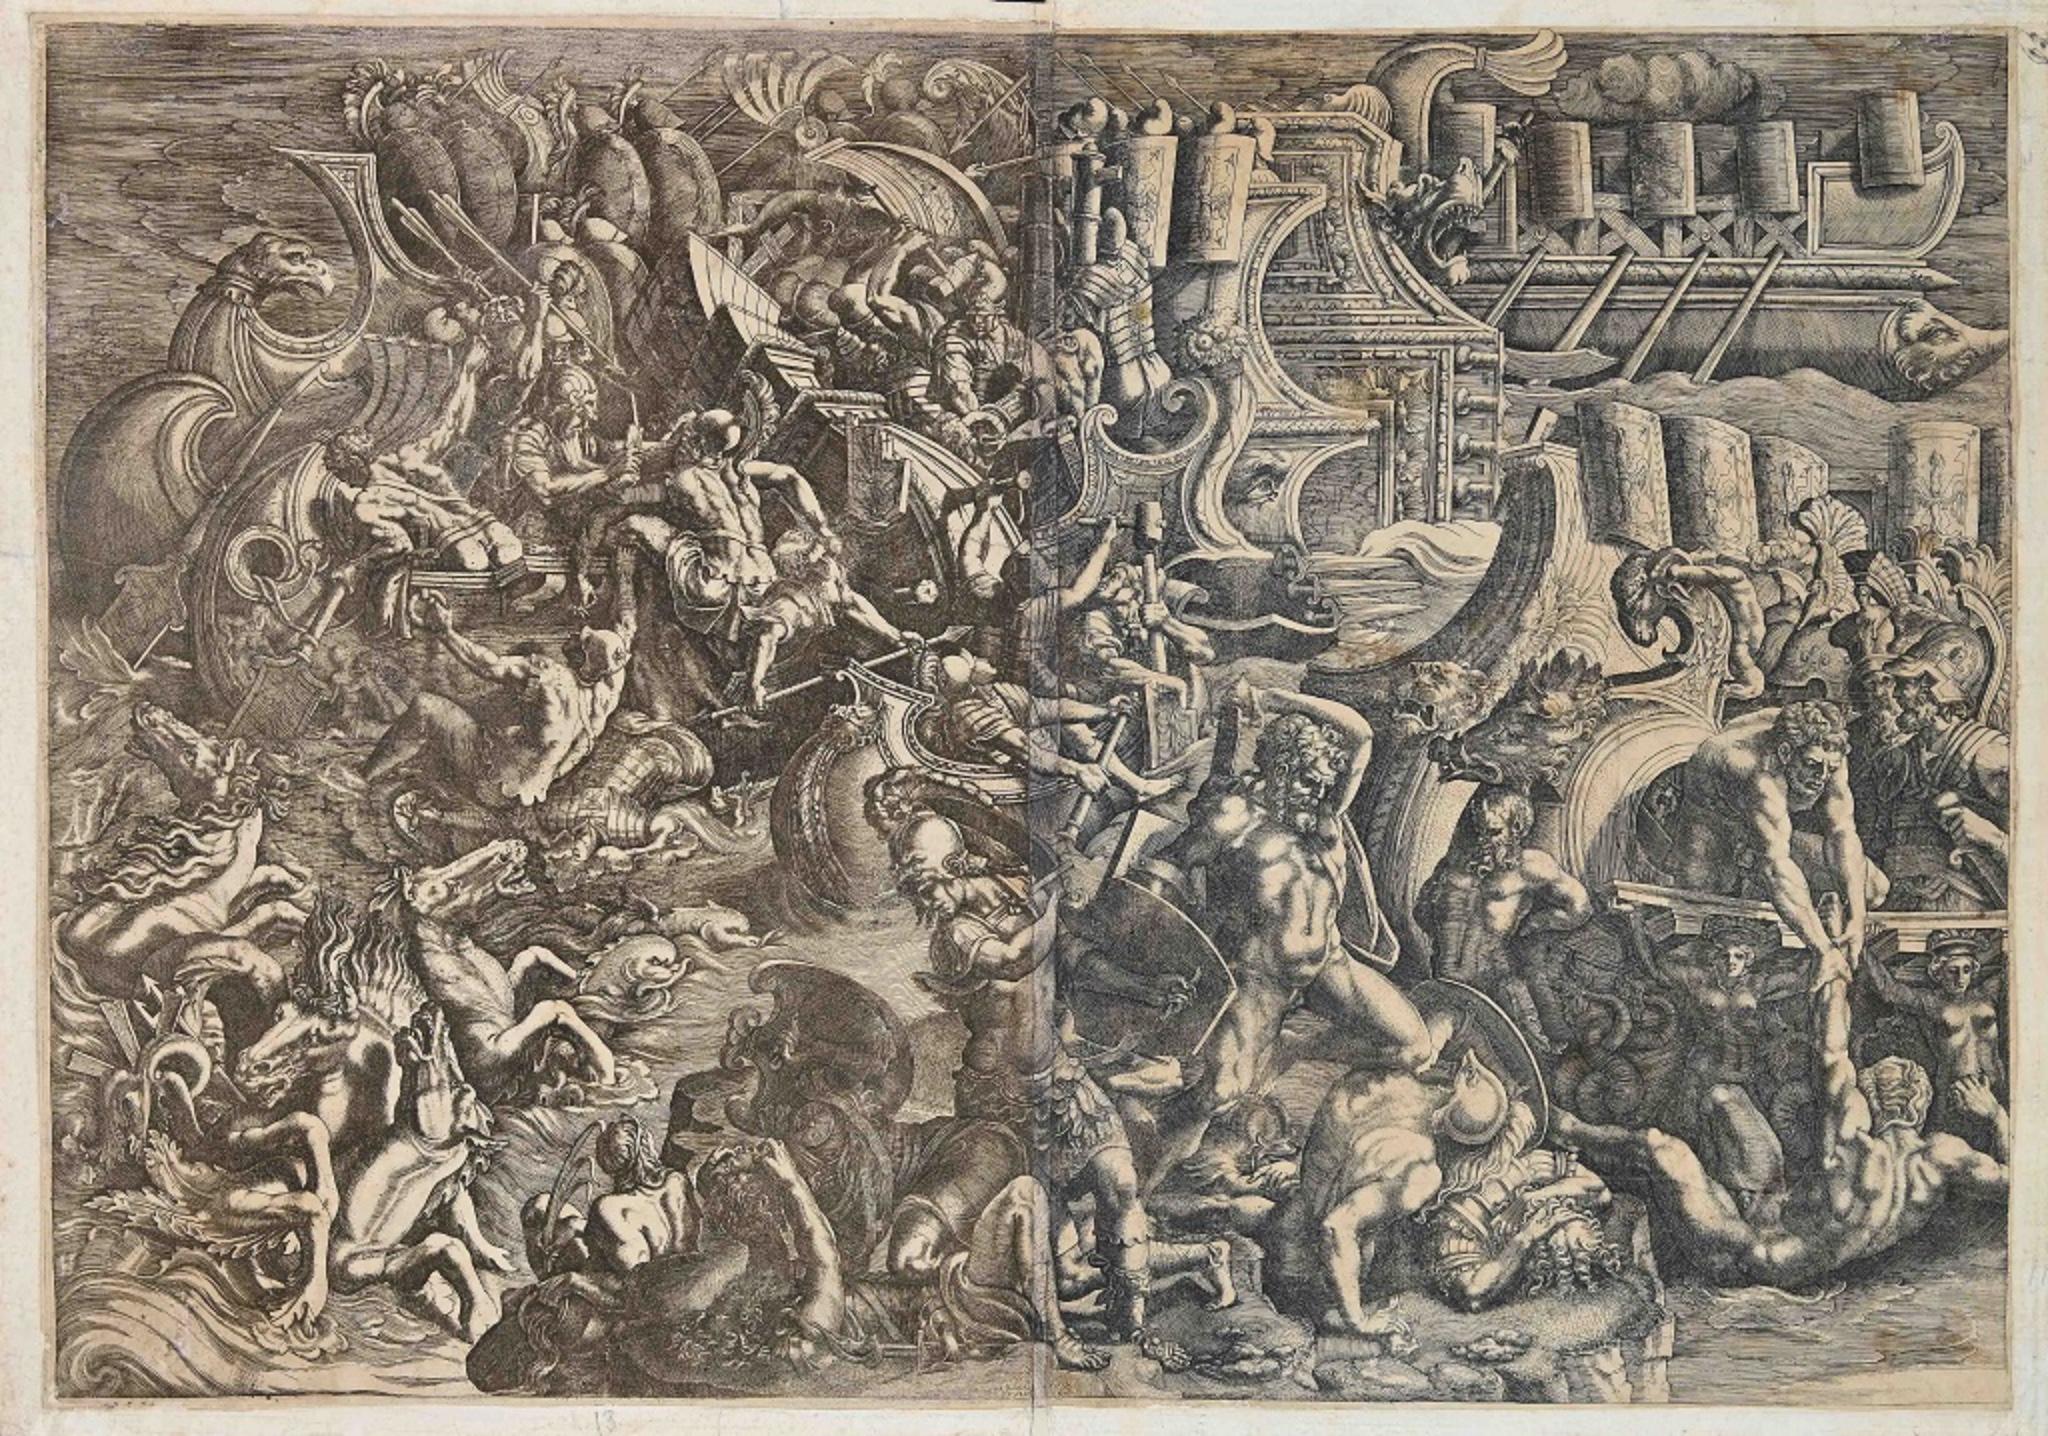 Giovanni Battista Scultori Figurative Print - Naval Battle between Greeks and Trojans - Etching by G. B.Scultori - 1538